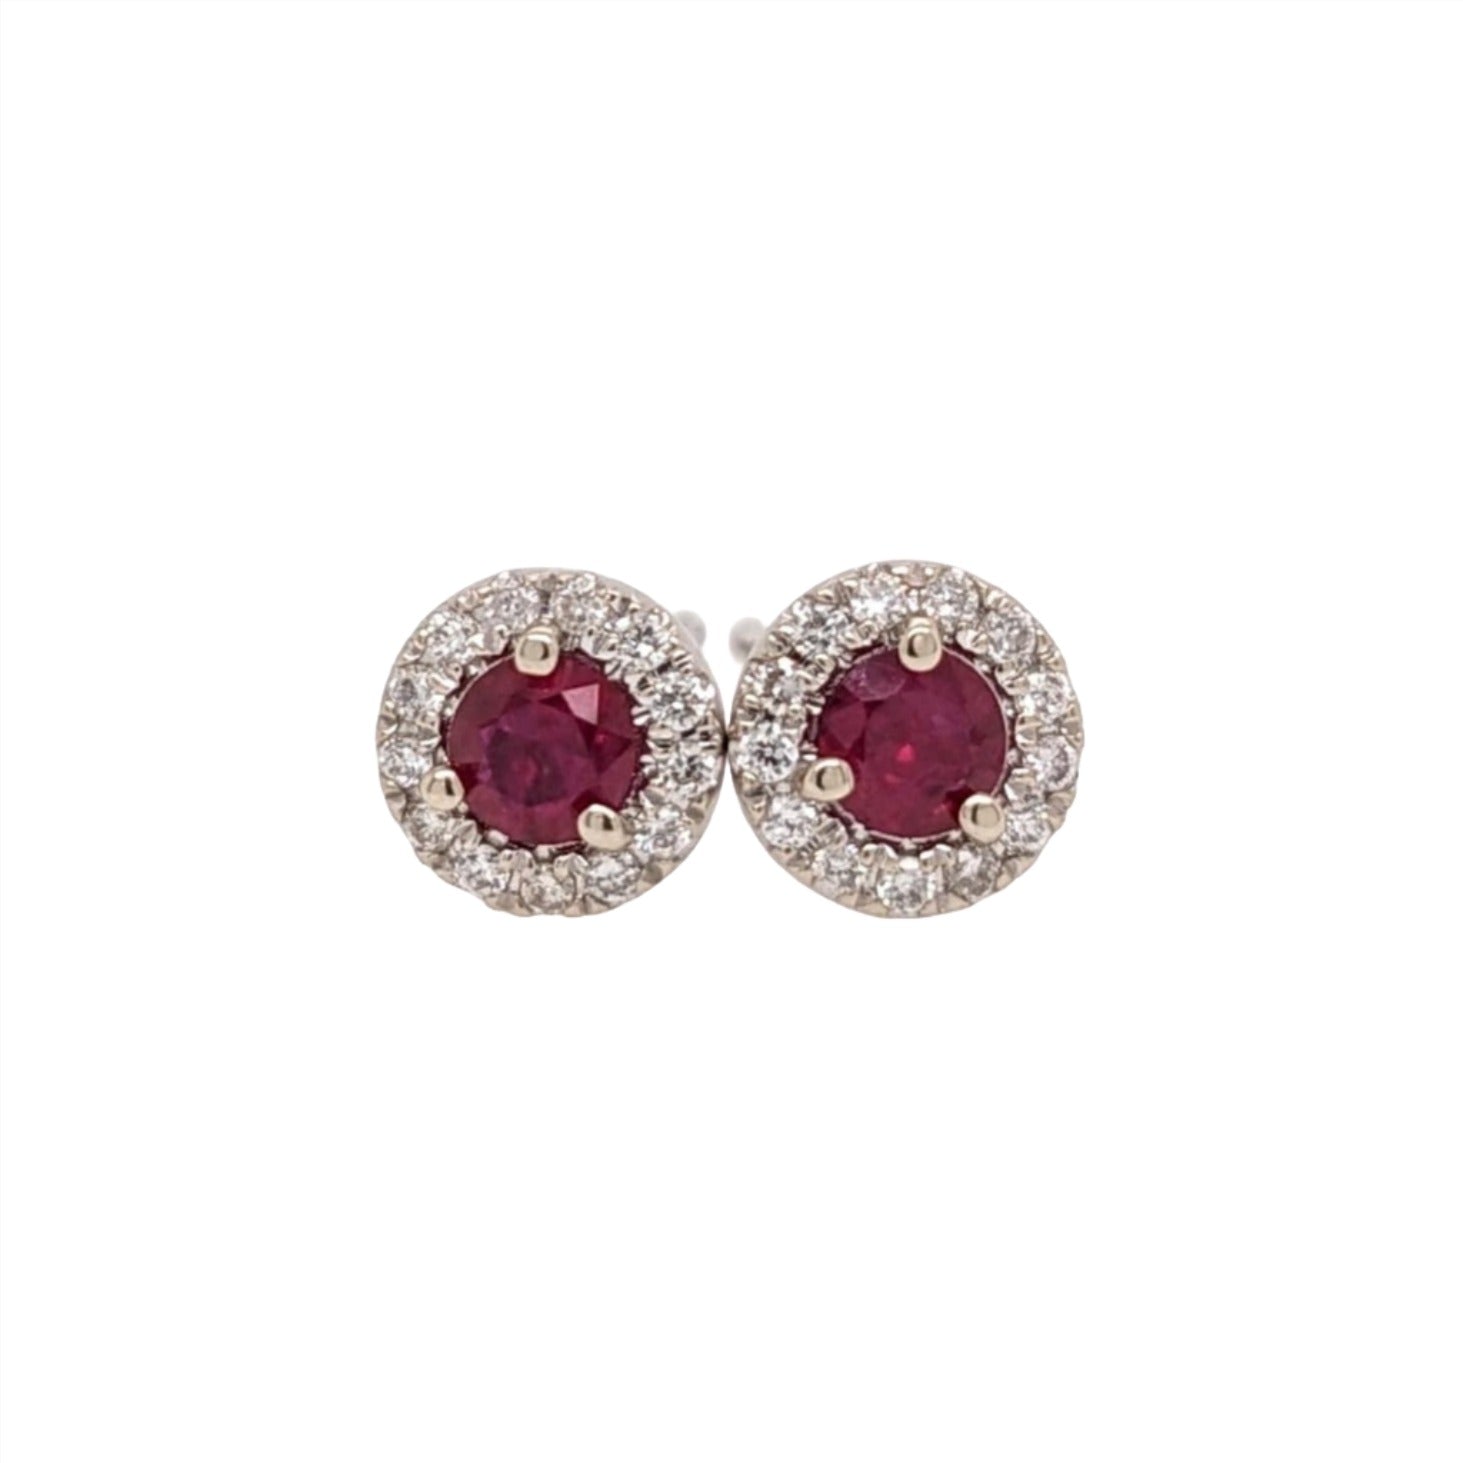 Pretty Red Ruby Stud Earrings w Earth Mined Diamonds in Solid 14K White Gold